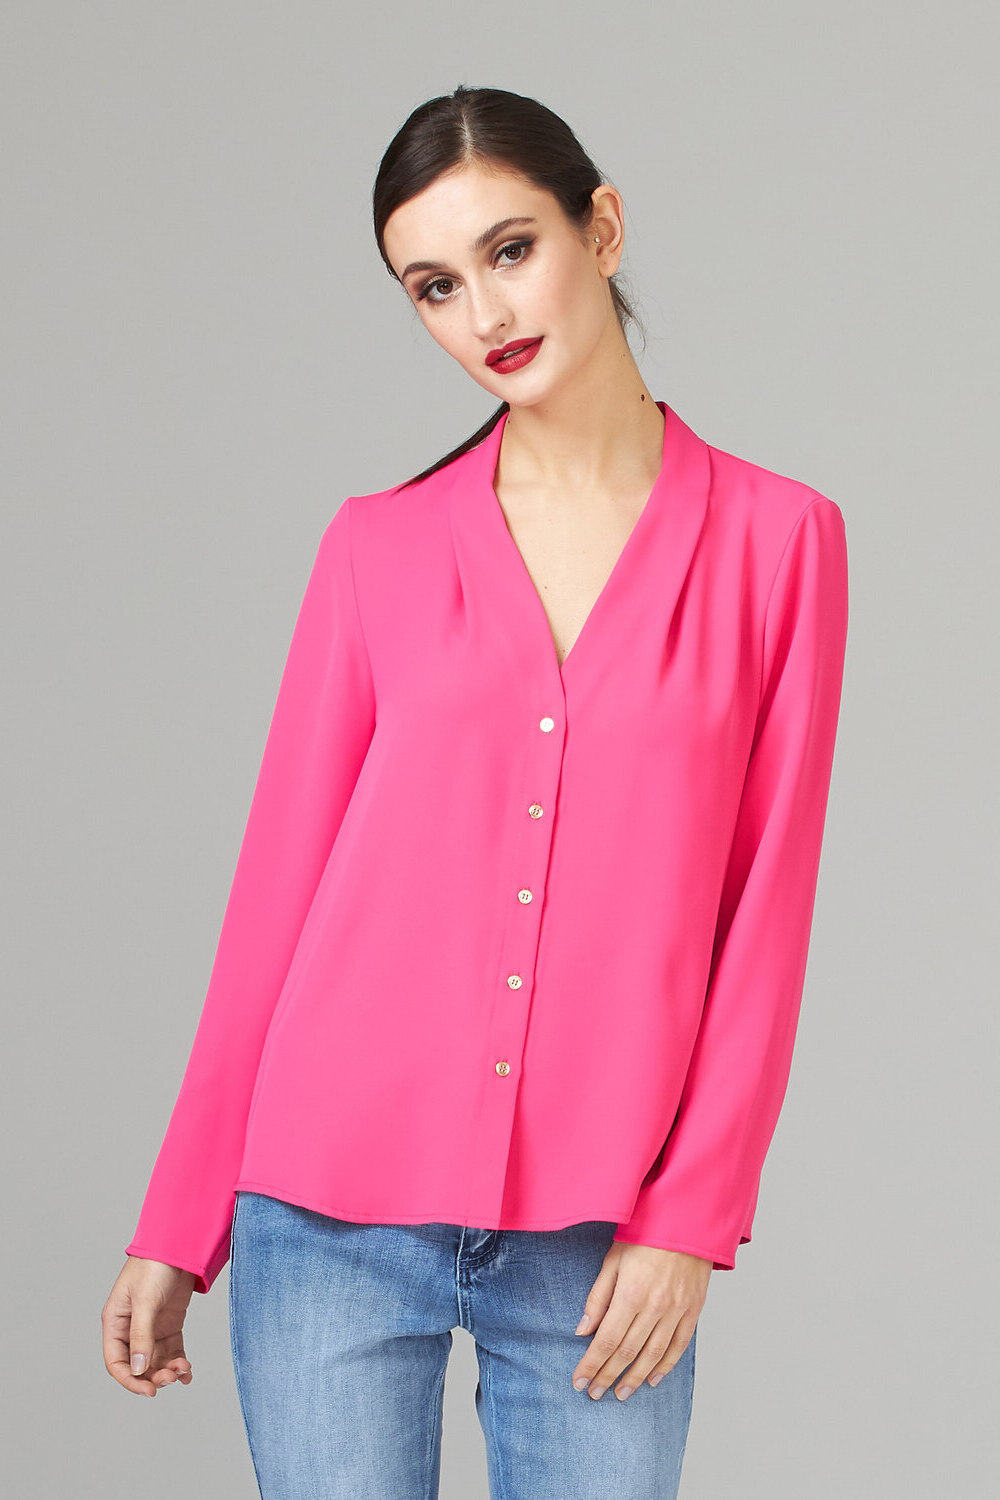 Joseph Ribkoff Shirt style 194419. Hyper Pink